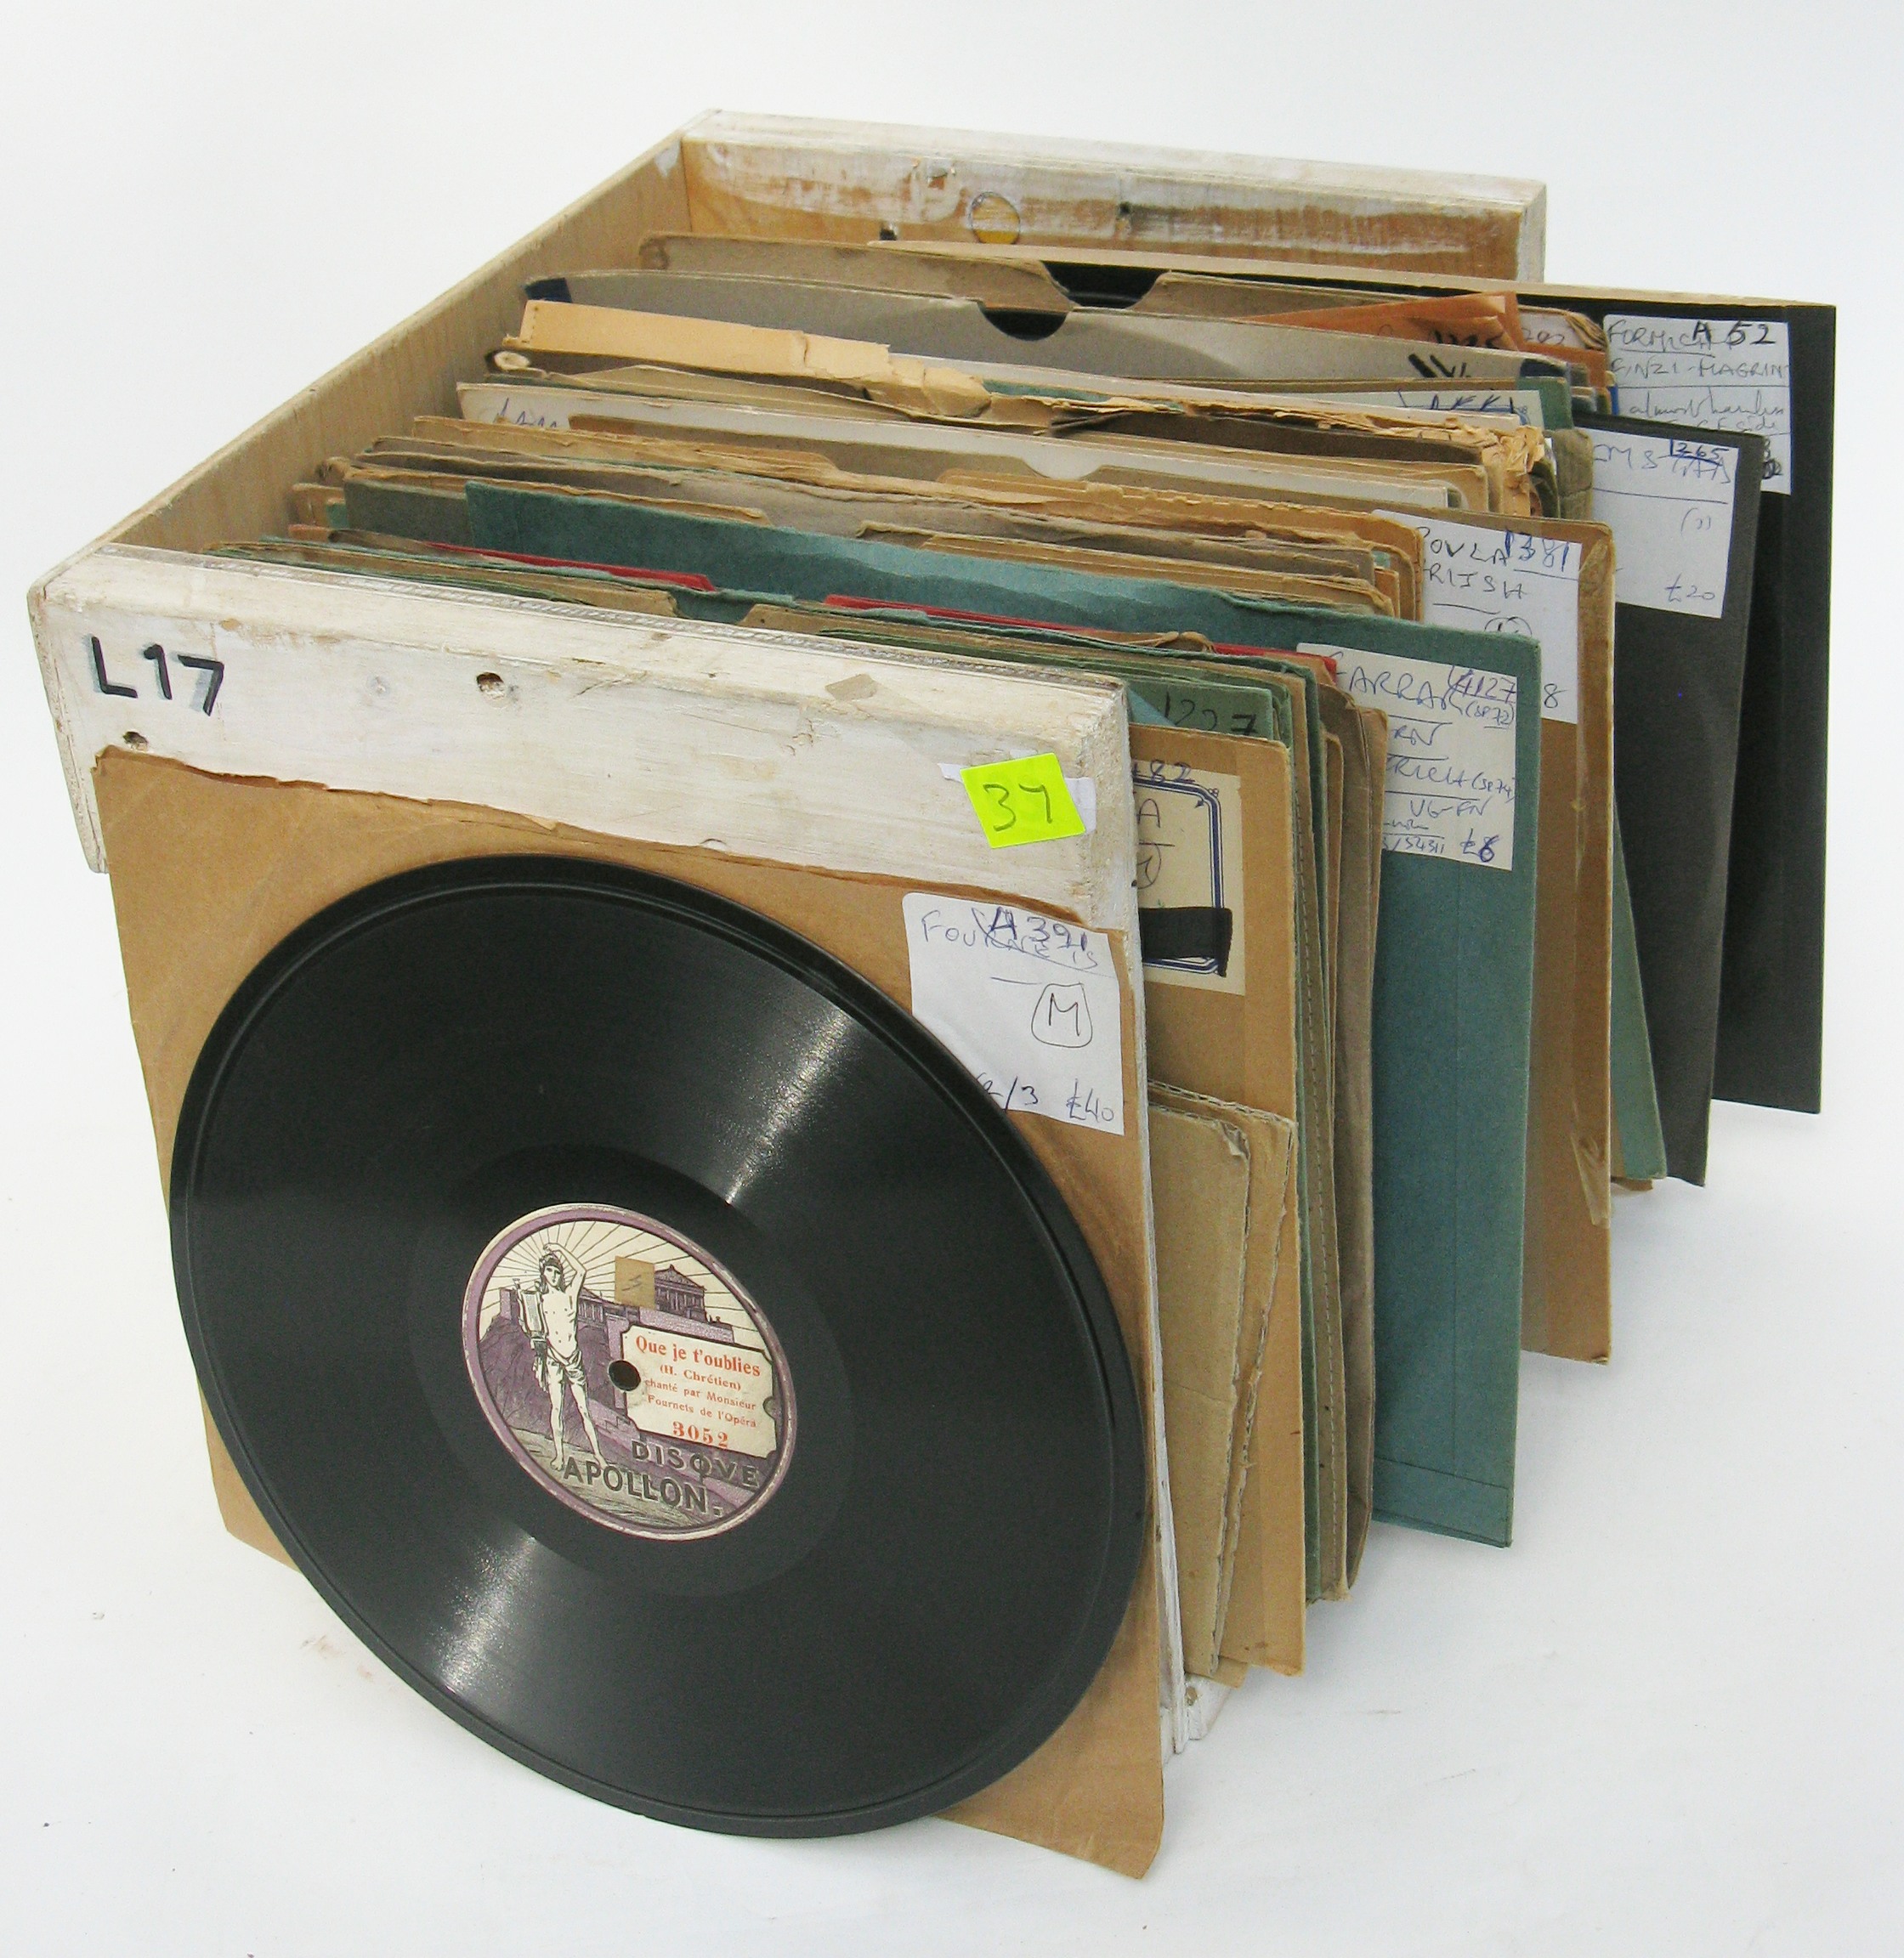 Vocal records, 10-inch: Eighty-six, by Friant, Farrar (G &T 33618, 53344, 54311, dog 7-034000, 7-